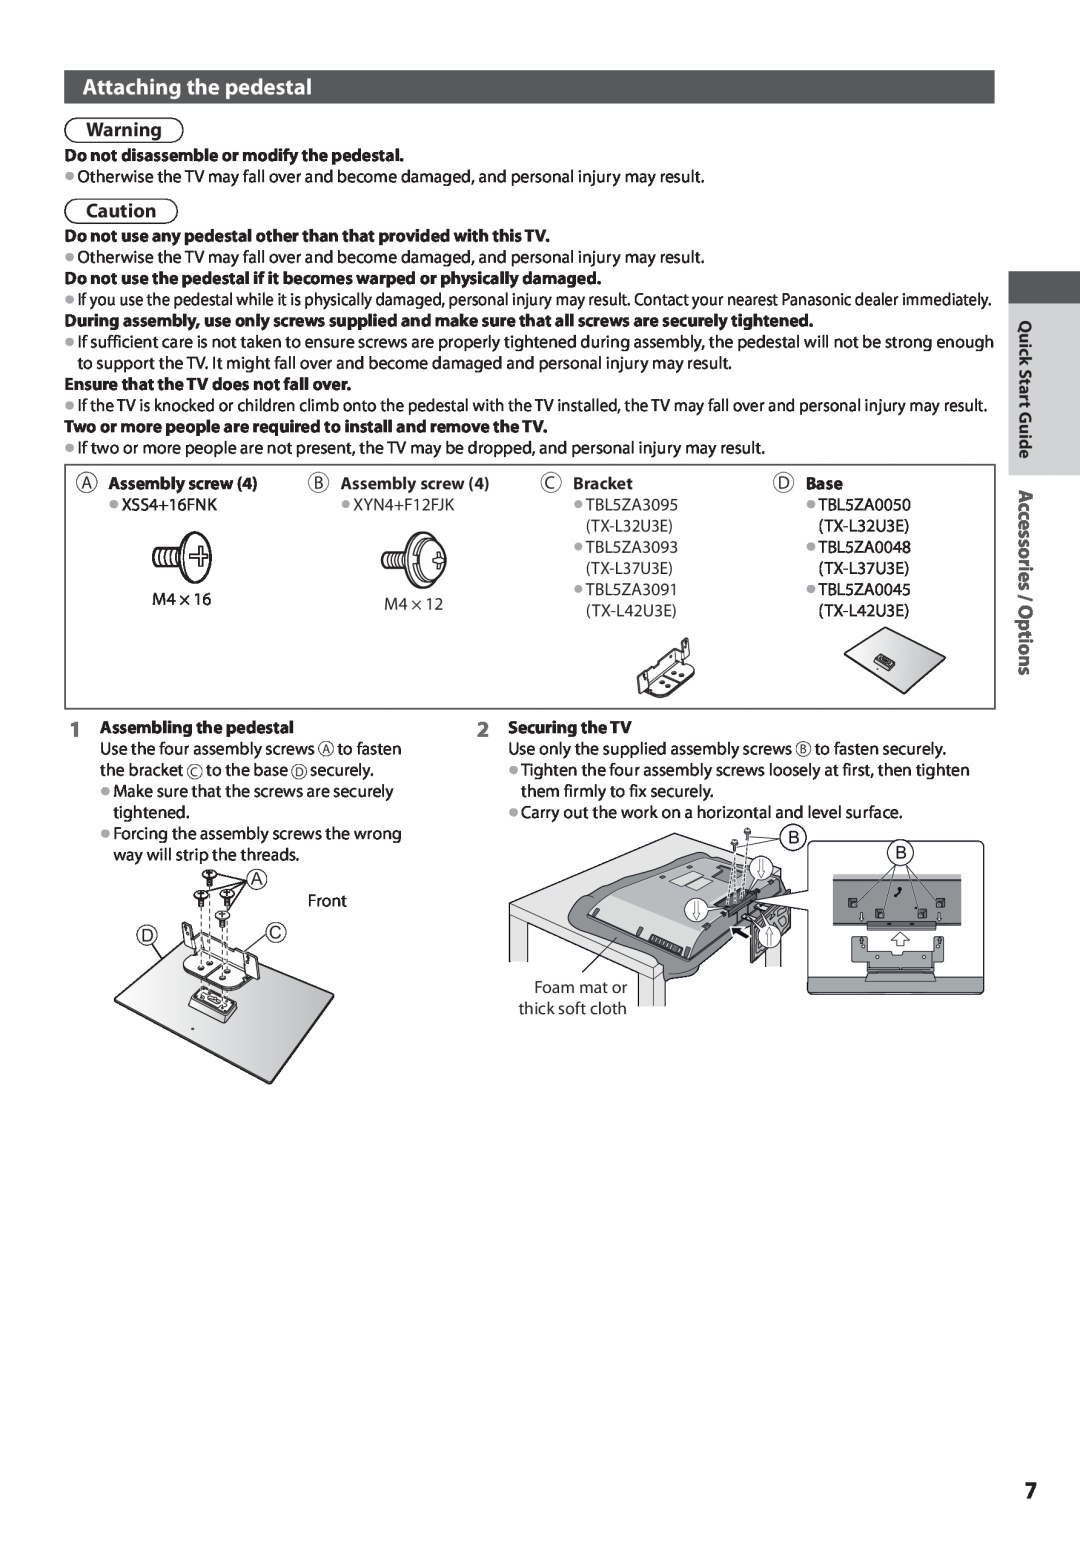 Panasonic TX-L32U3E, TX-L42U3E, TX-L37U3E Attaching the pedestal, Quick Start Guide Accessories / Options 